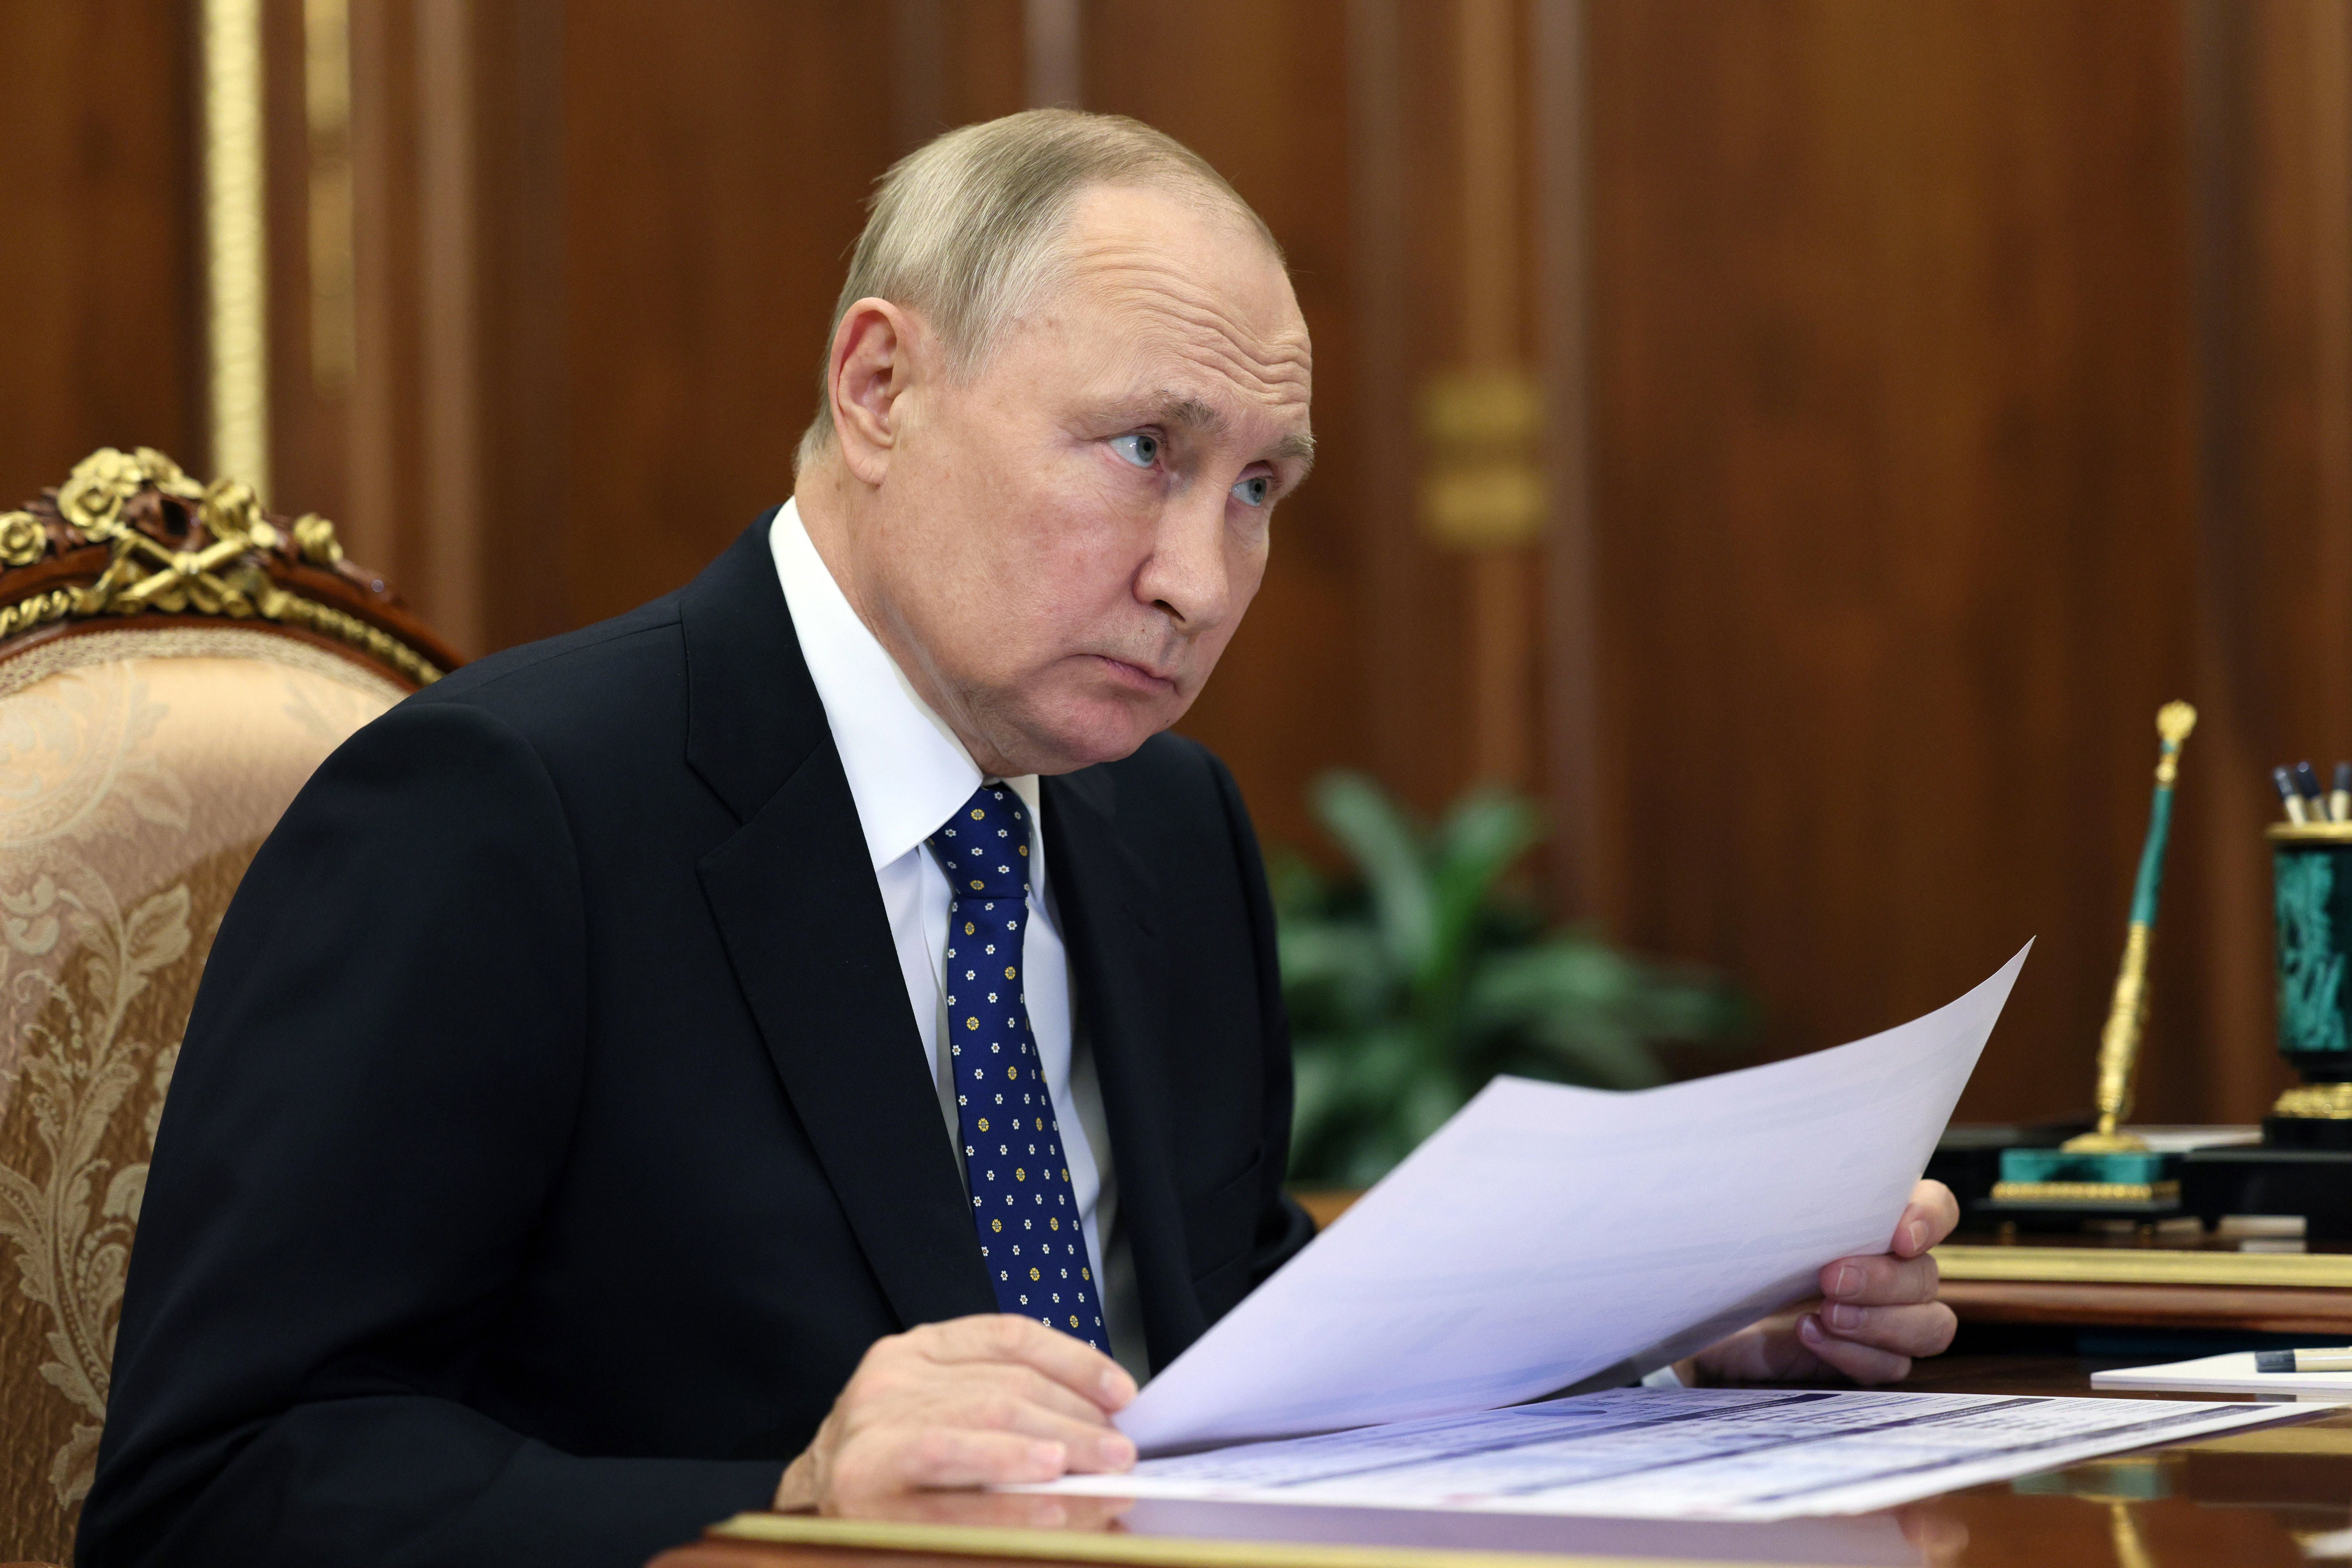 Los planes secretos de Putin: la guerra de Ucrania va hacia una "escalada incontrolada"